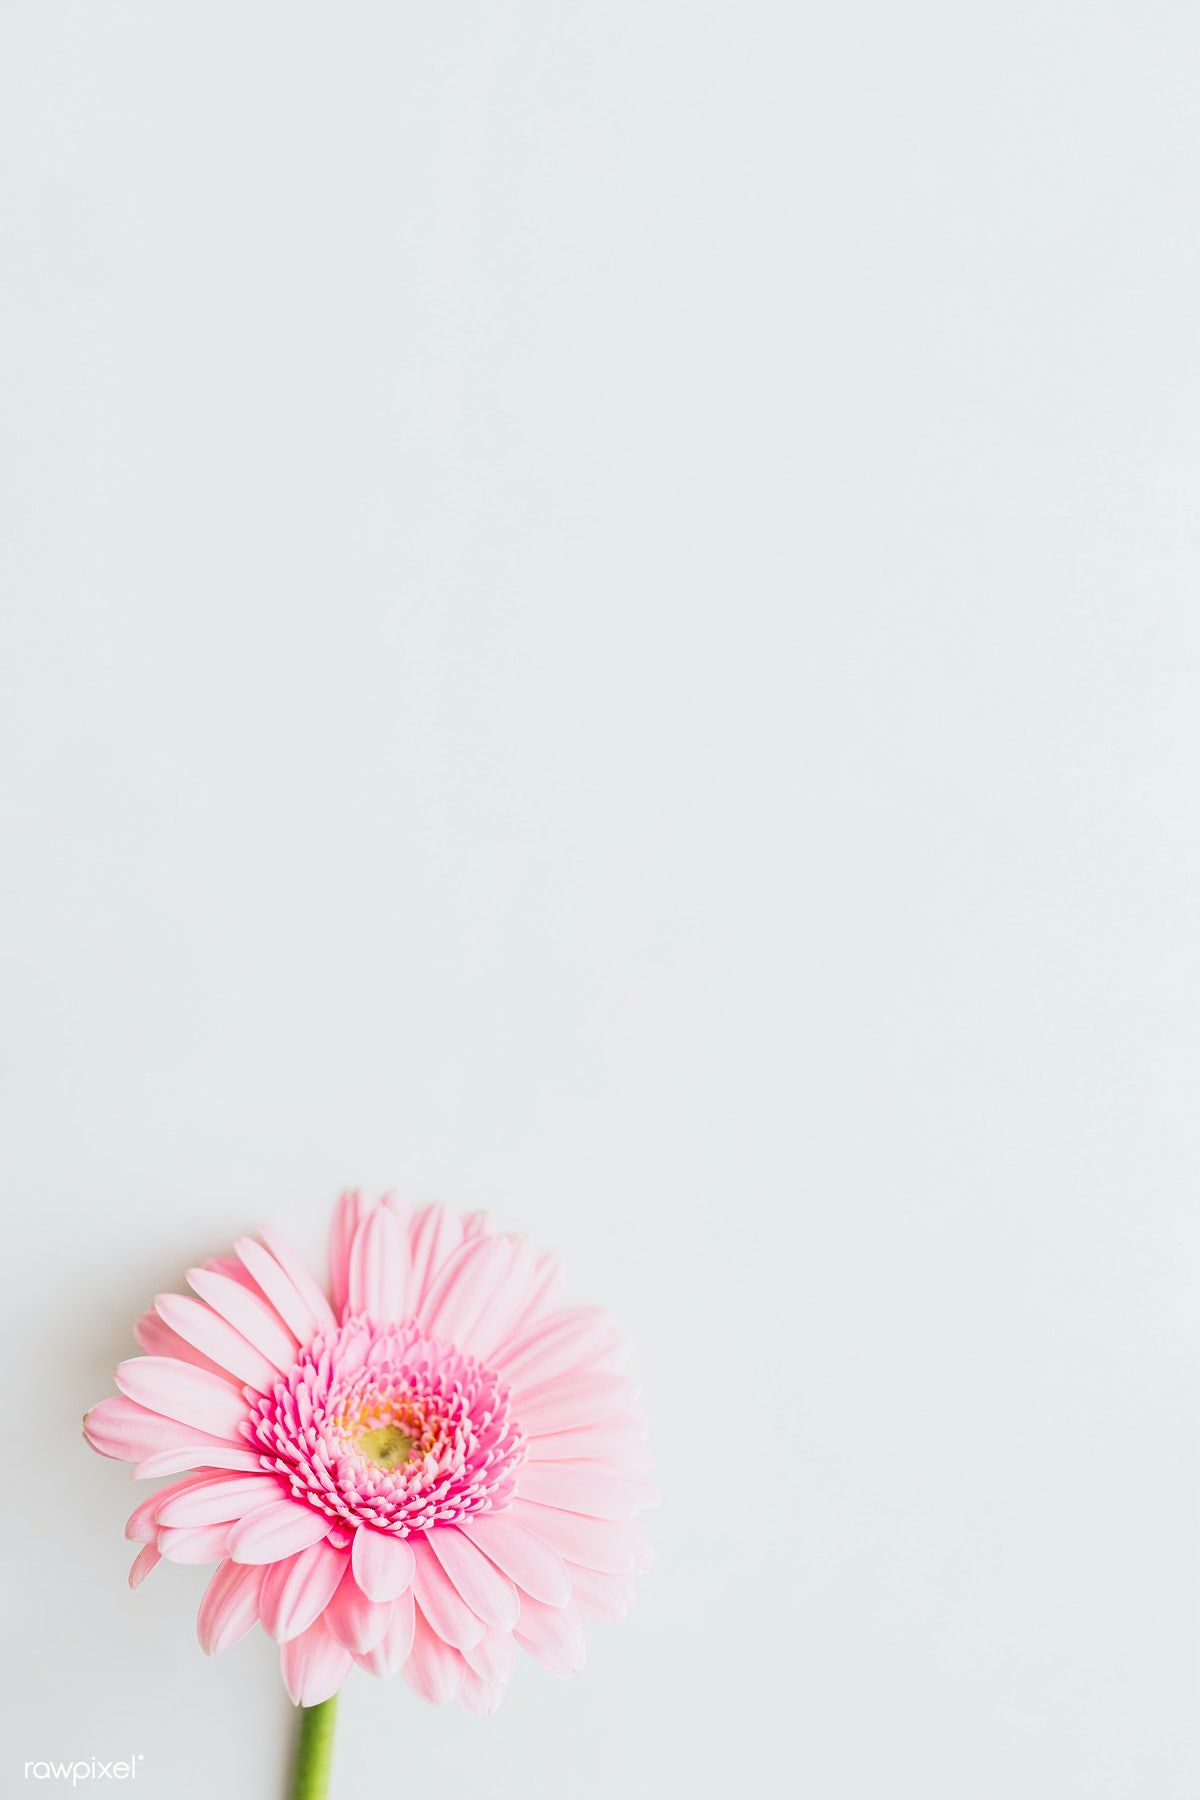 Single light pink Gerbera daisy flower on gray background 1200x1800